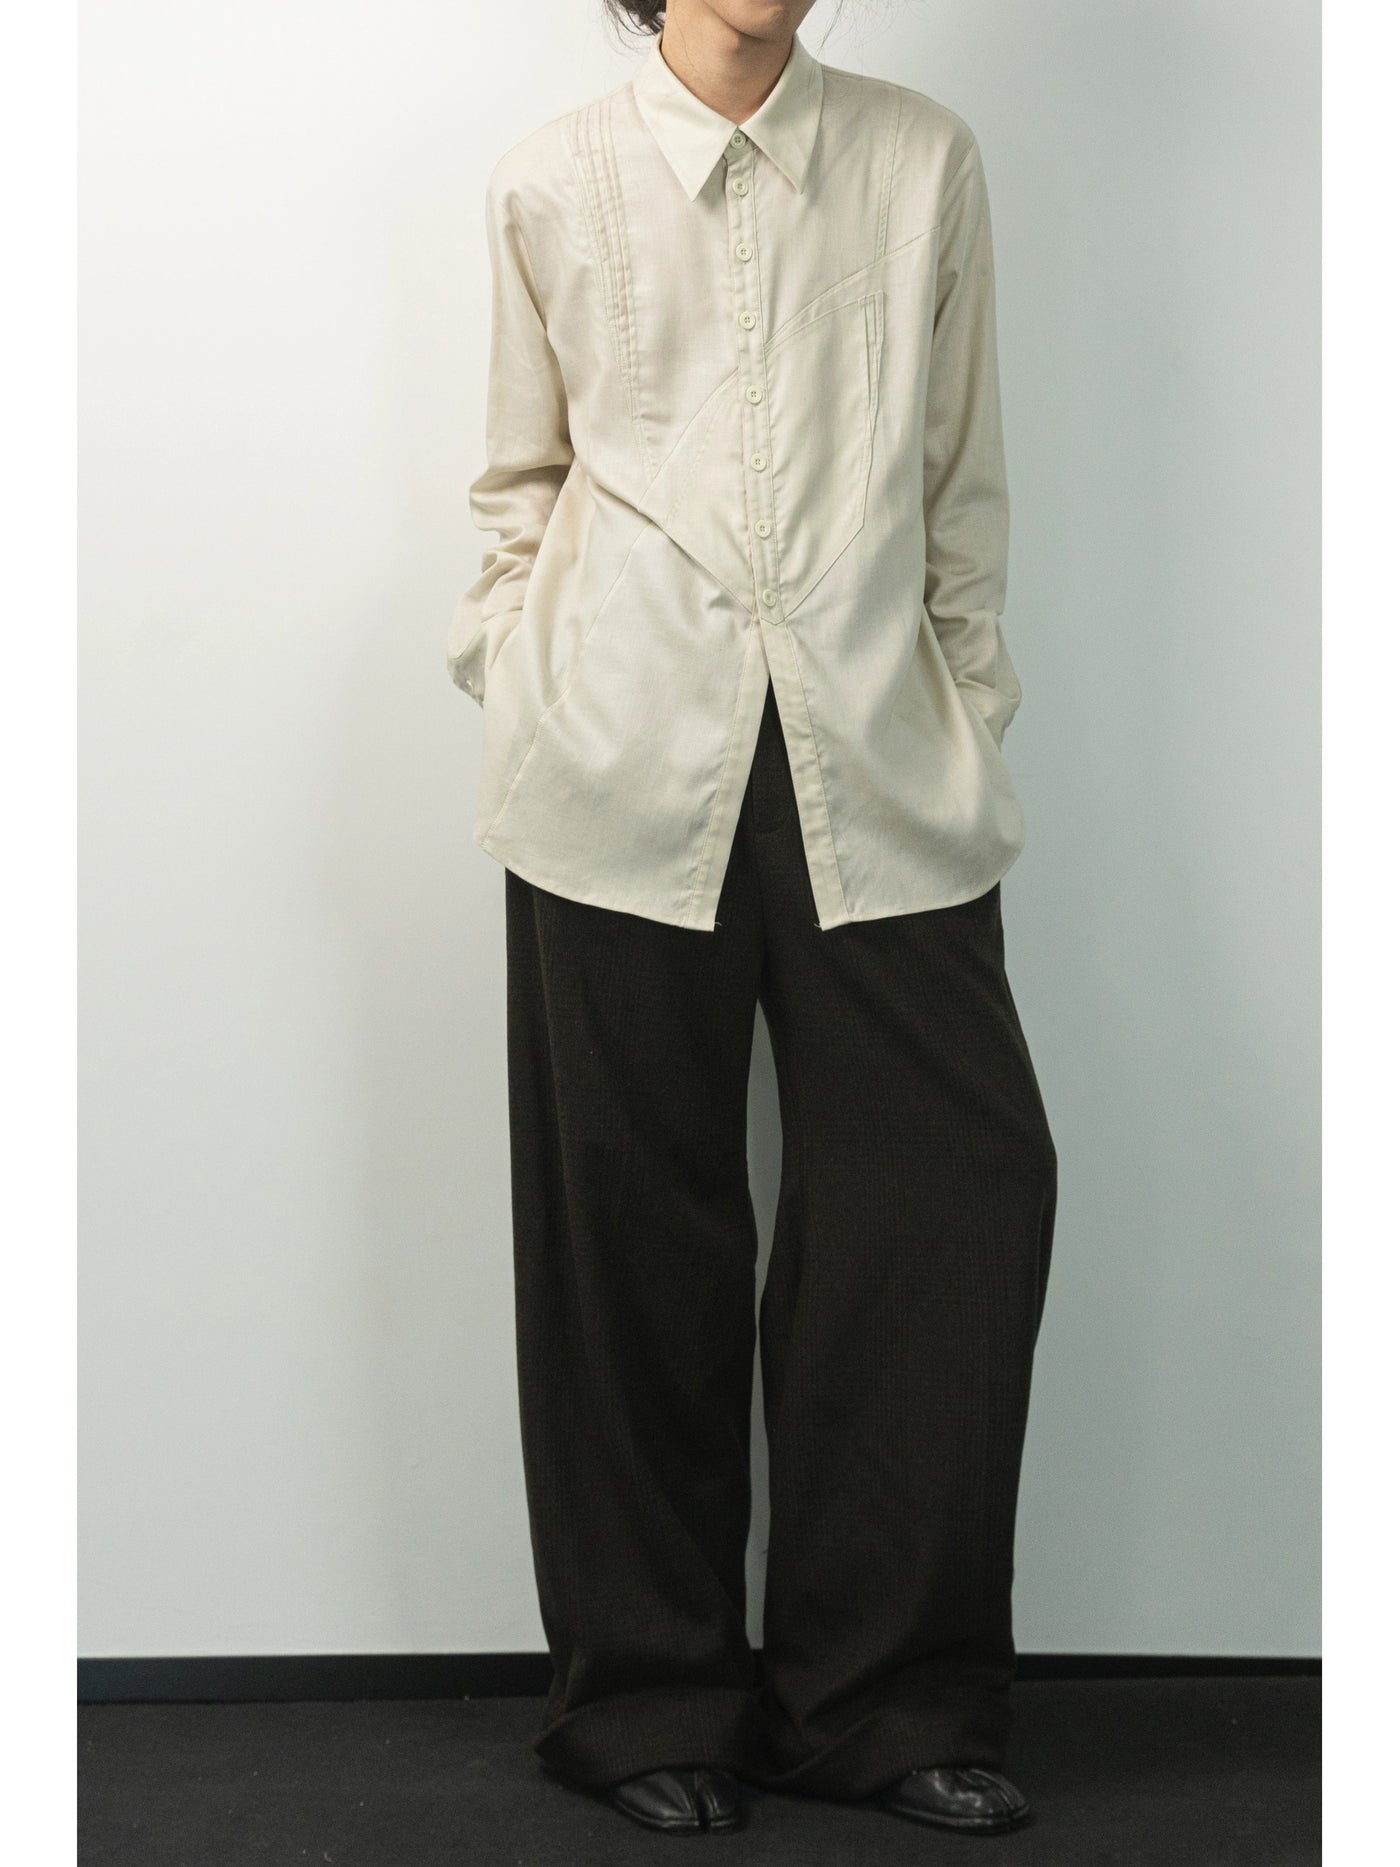 Vintage Pattern Lined Pants Korean Street Fashion Pants By ILNya Shop Online at OH Vault